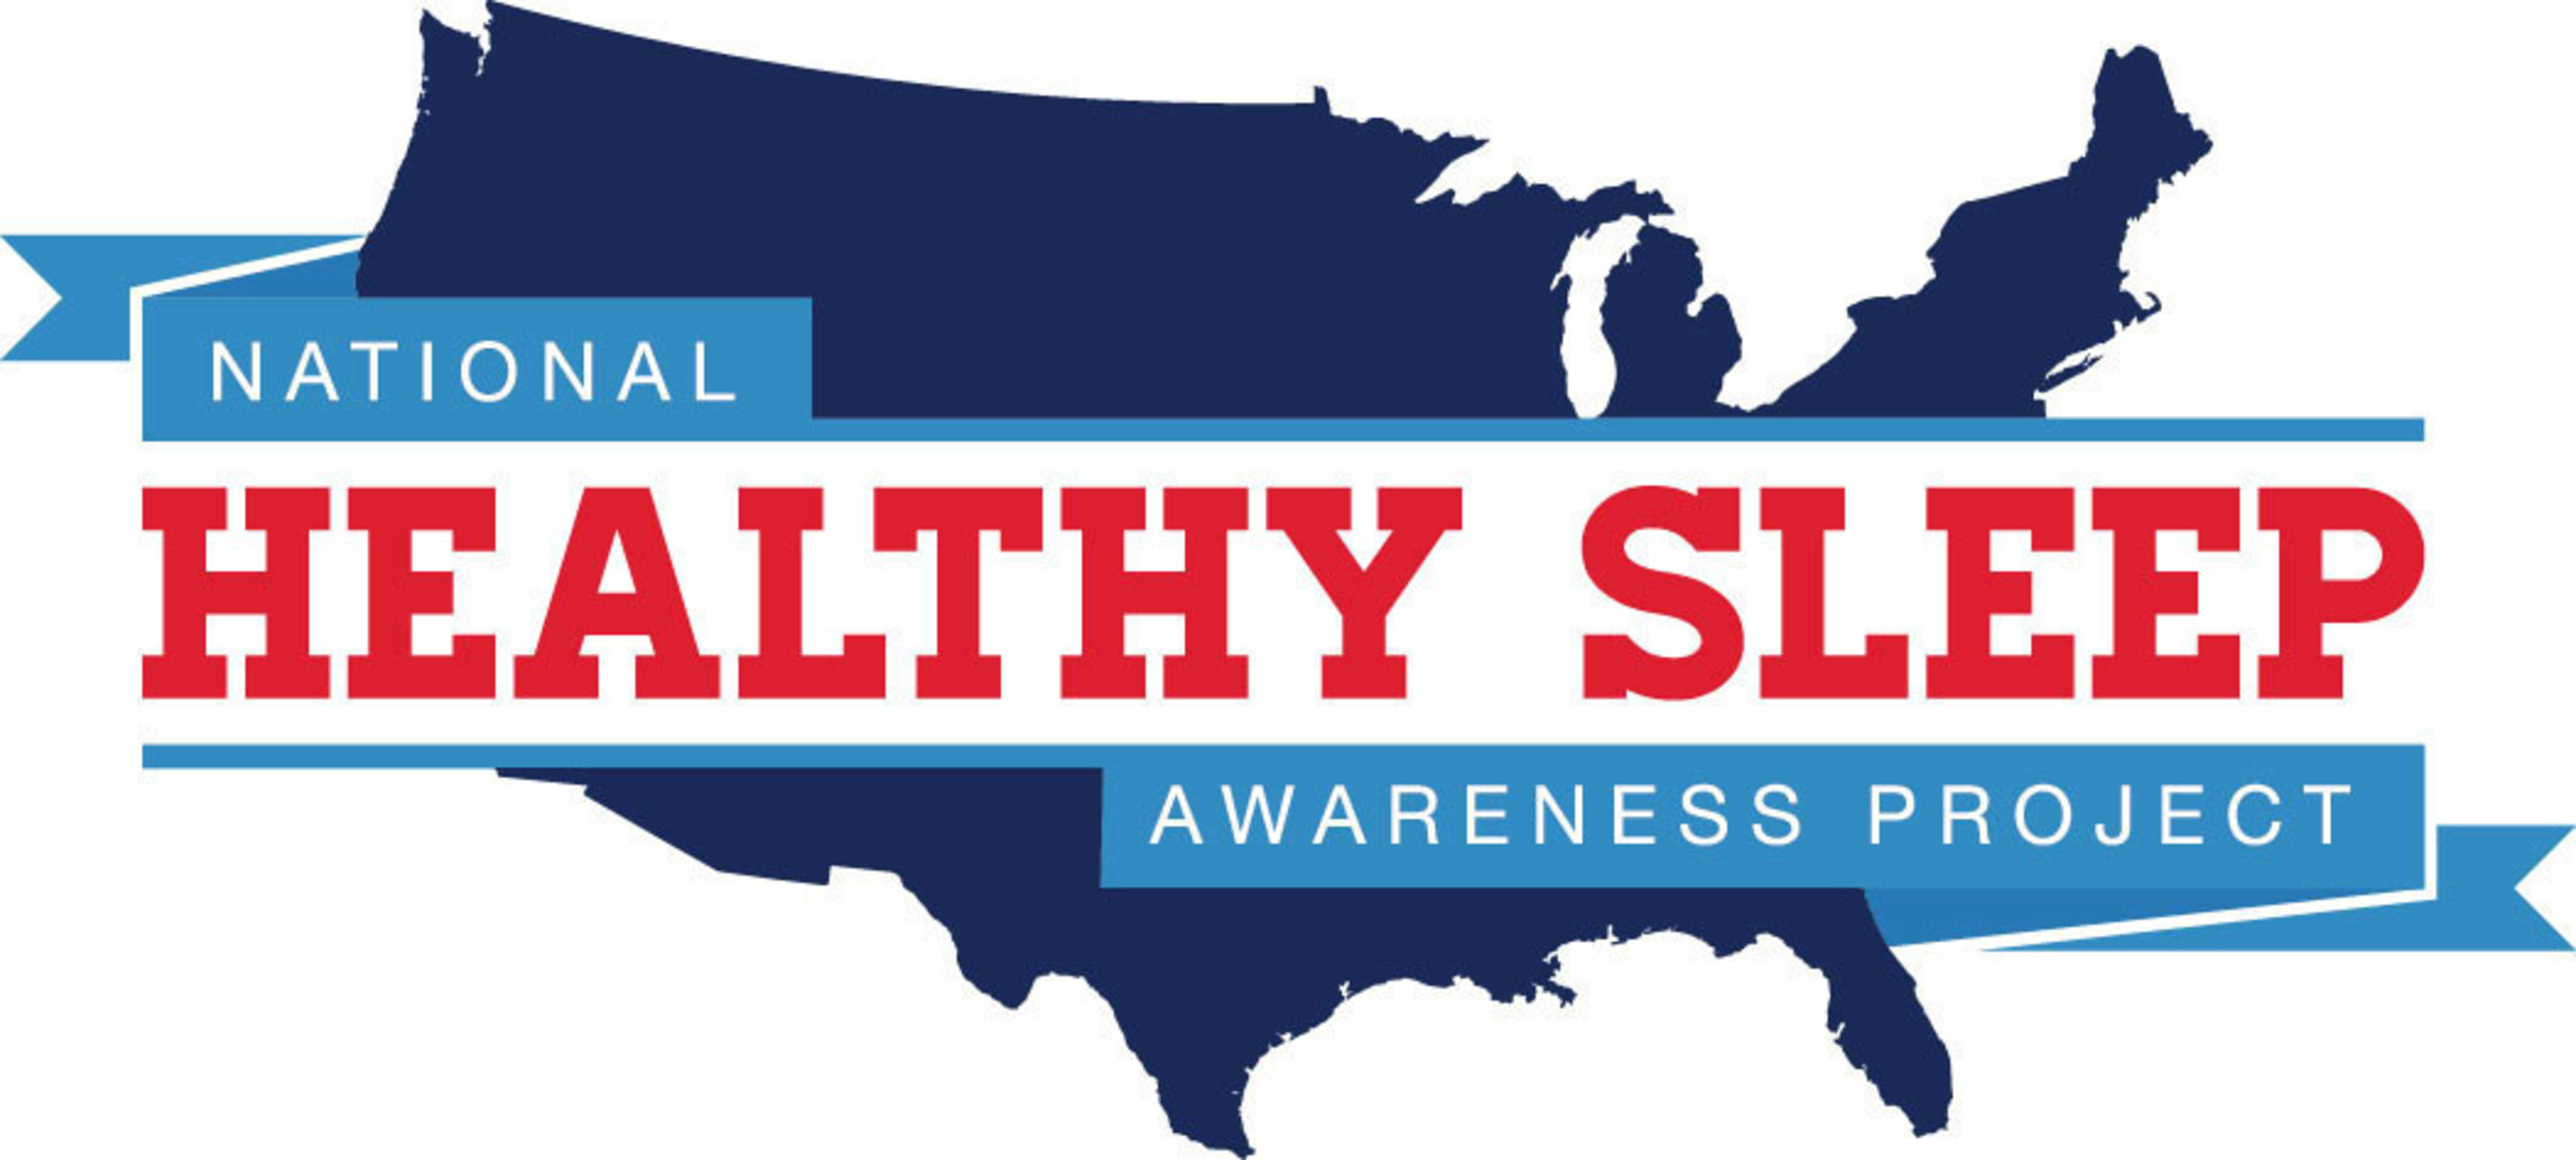 The National Healthy Sleep Awareness Project